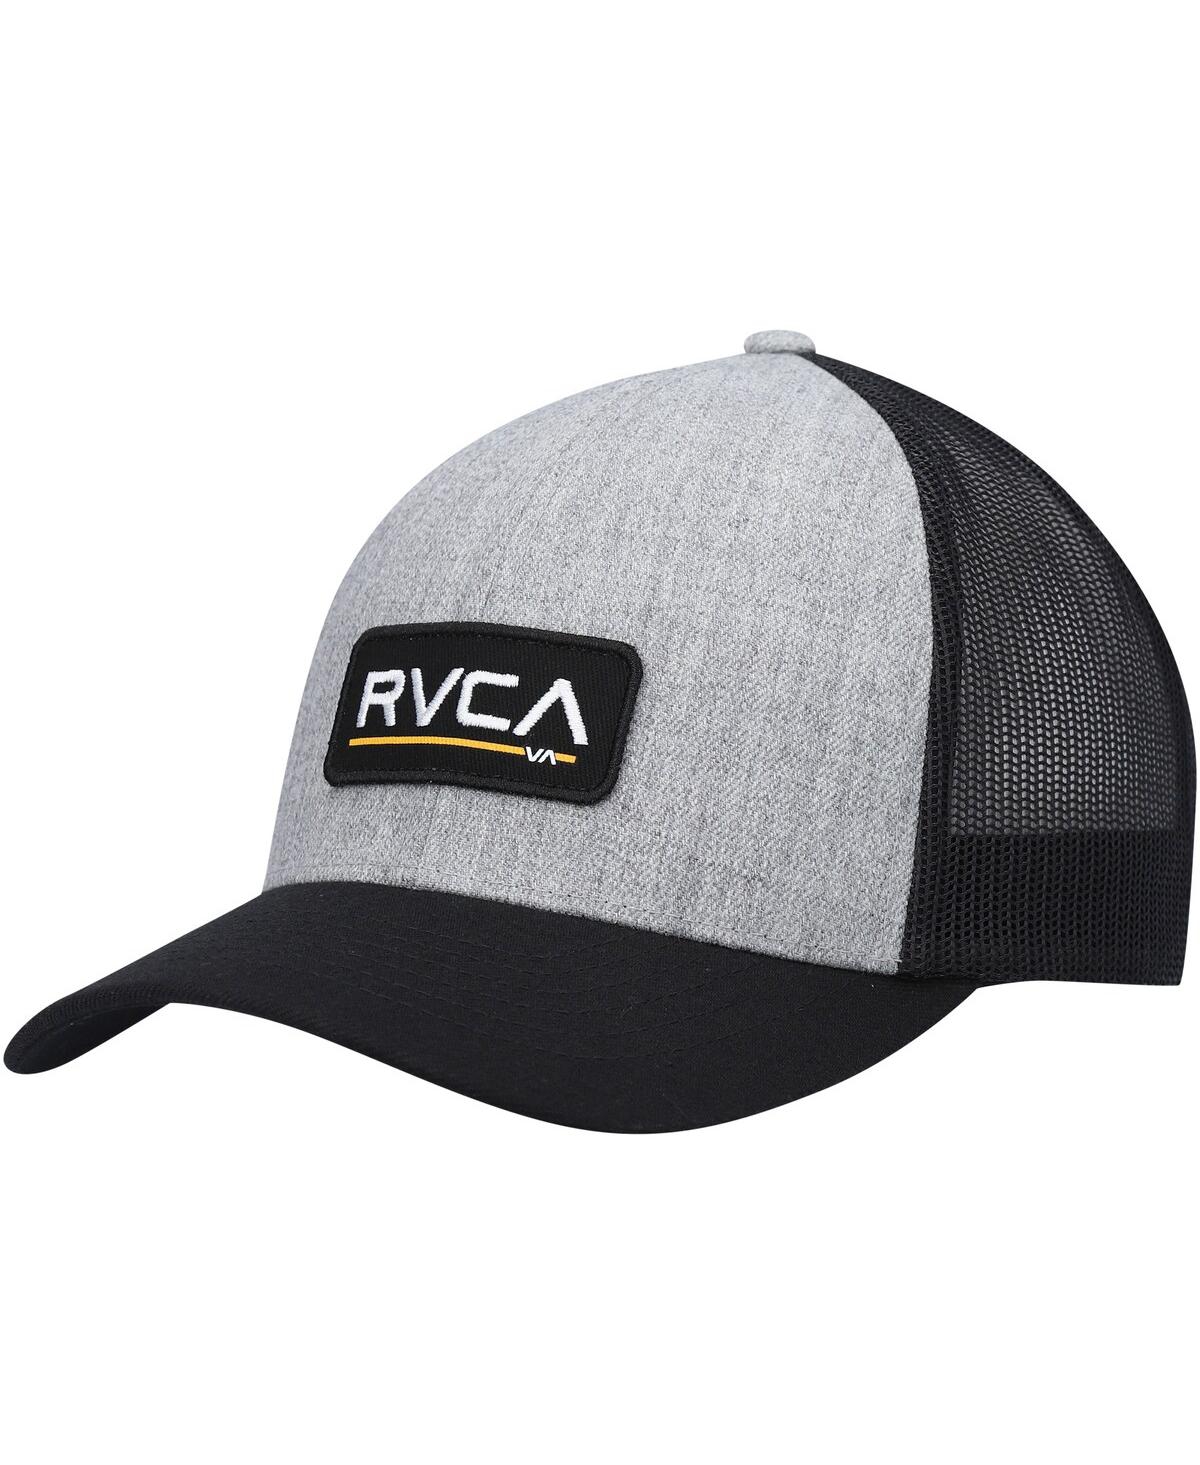 RVCA MEN'S RVCA HEATHERED GRAY TICKET TRUCKER III SNAPBACK HAT